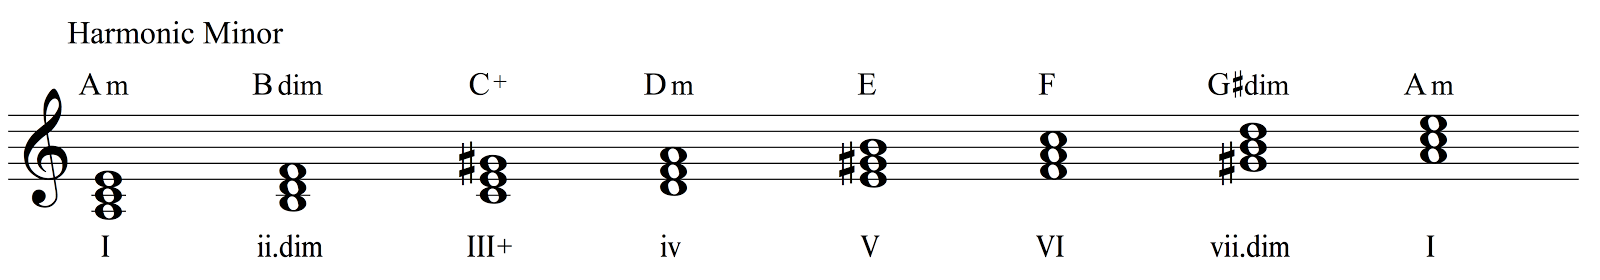 Harmonic Minor Chords